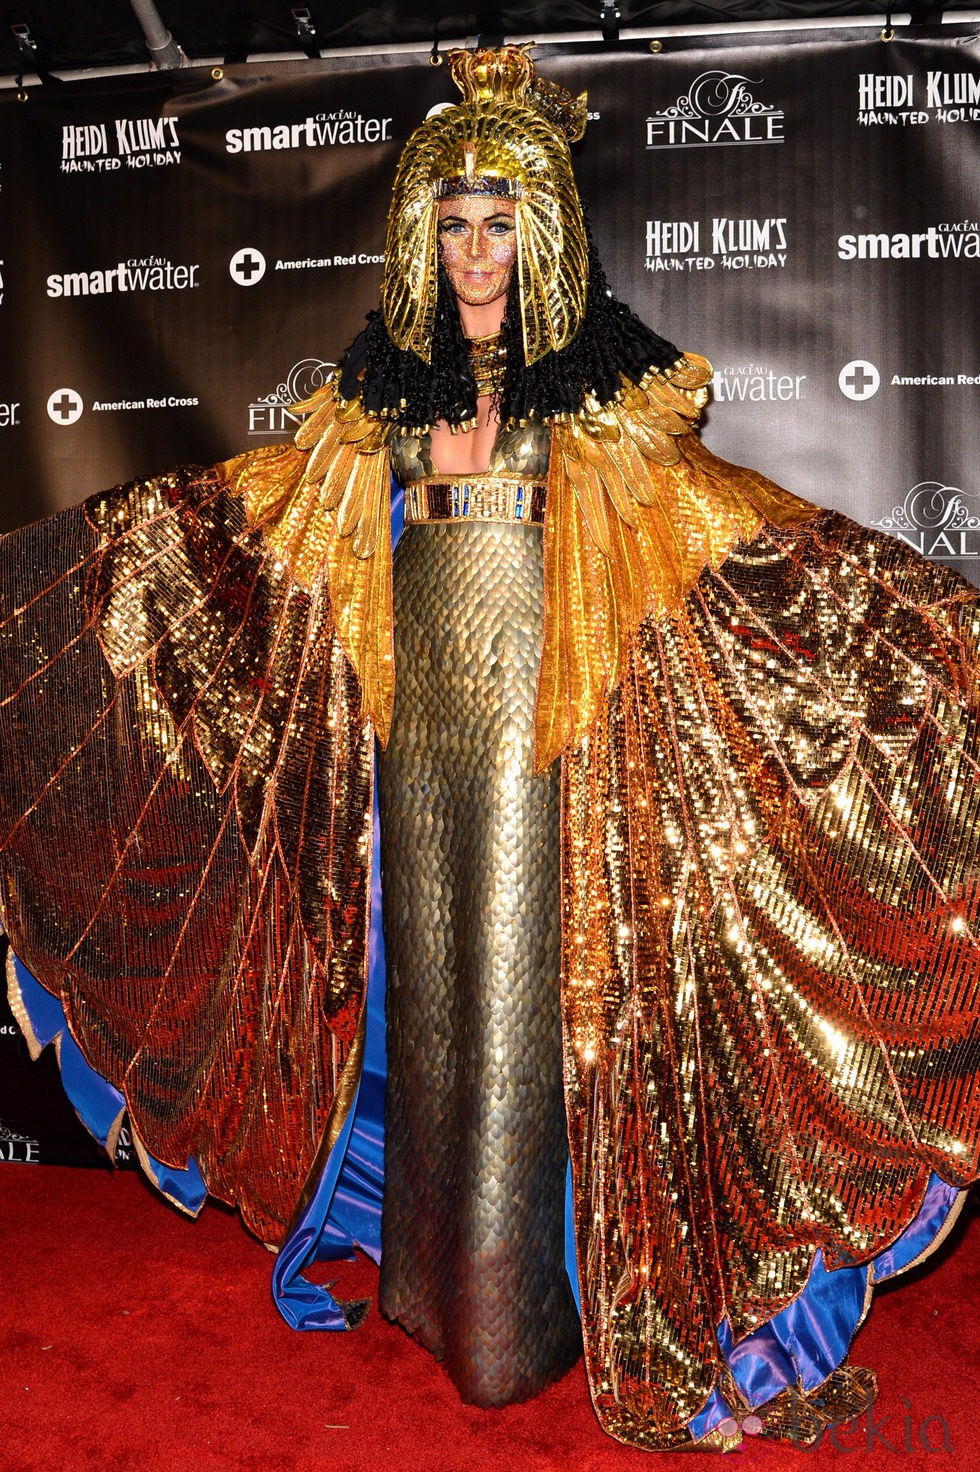 Heidi Klum disfrazada de Cleopatra en su fiesta de Halloween 2012